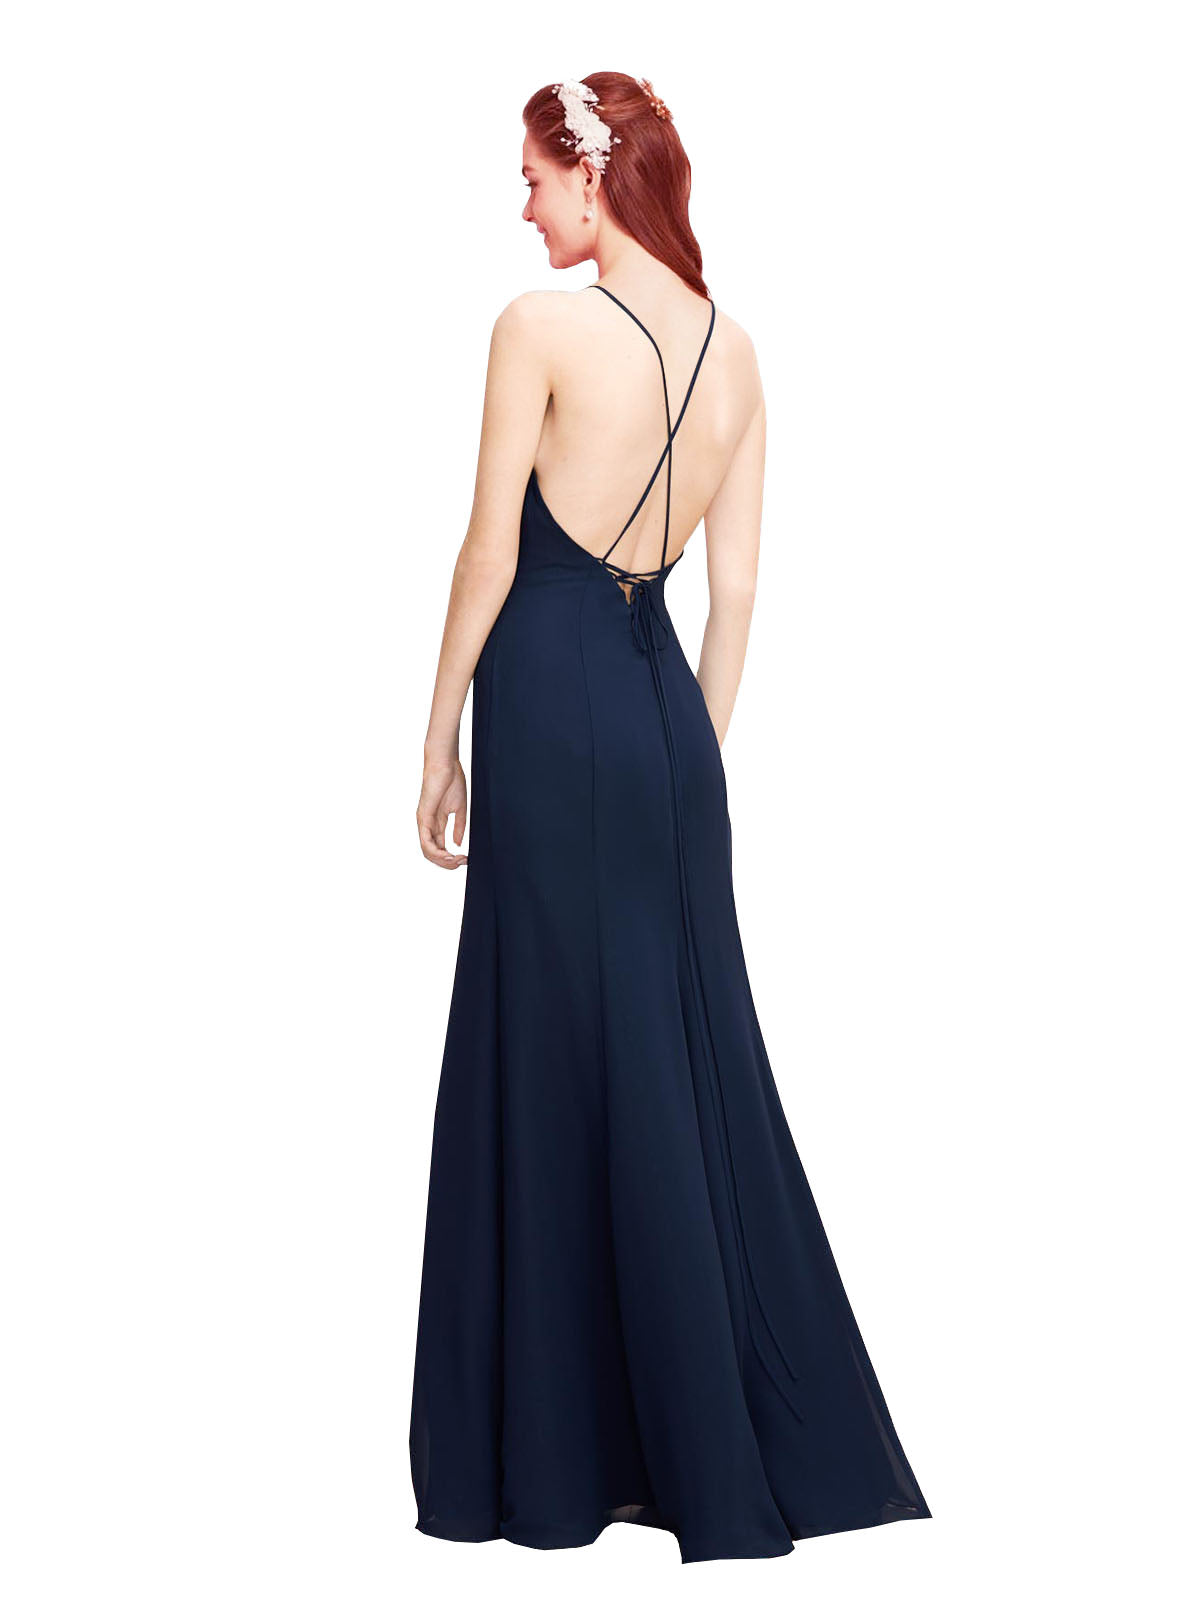 Shop Online Mermaid Halter High Neck Floor Length Sleeveless Long Dark Navy Bridesmaid Dresses Terrica